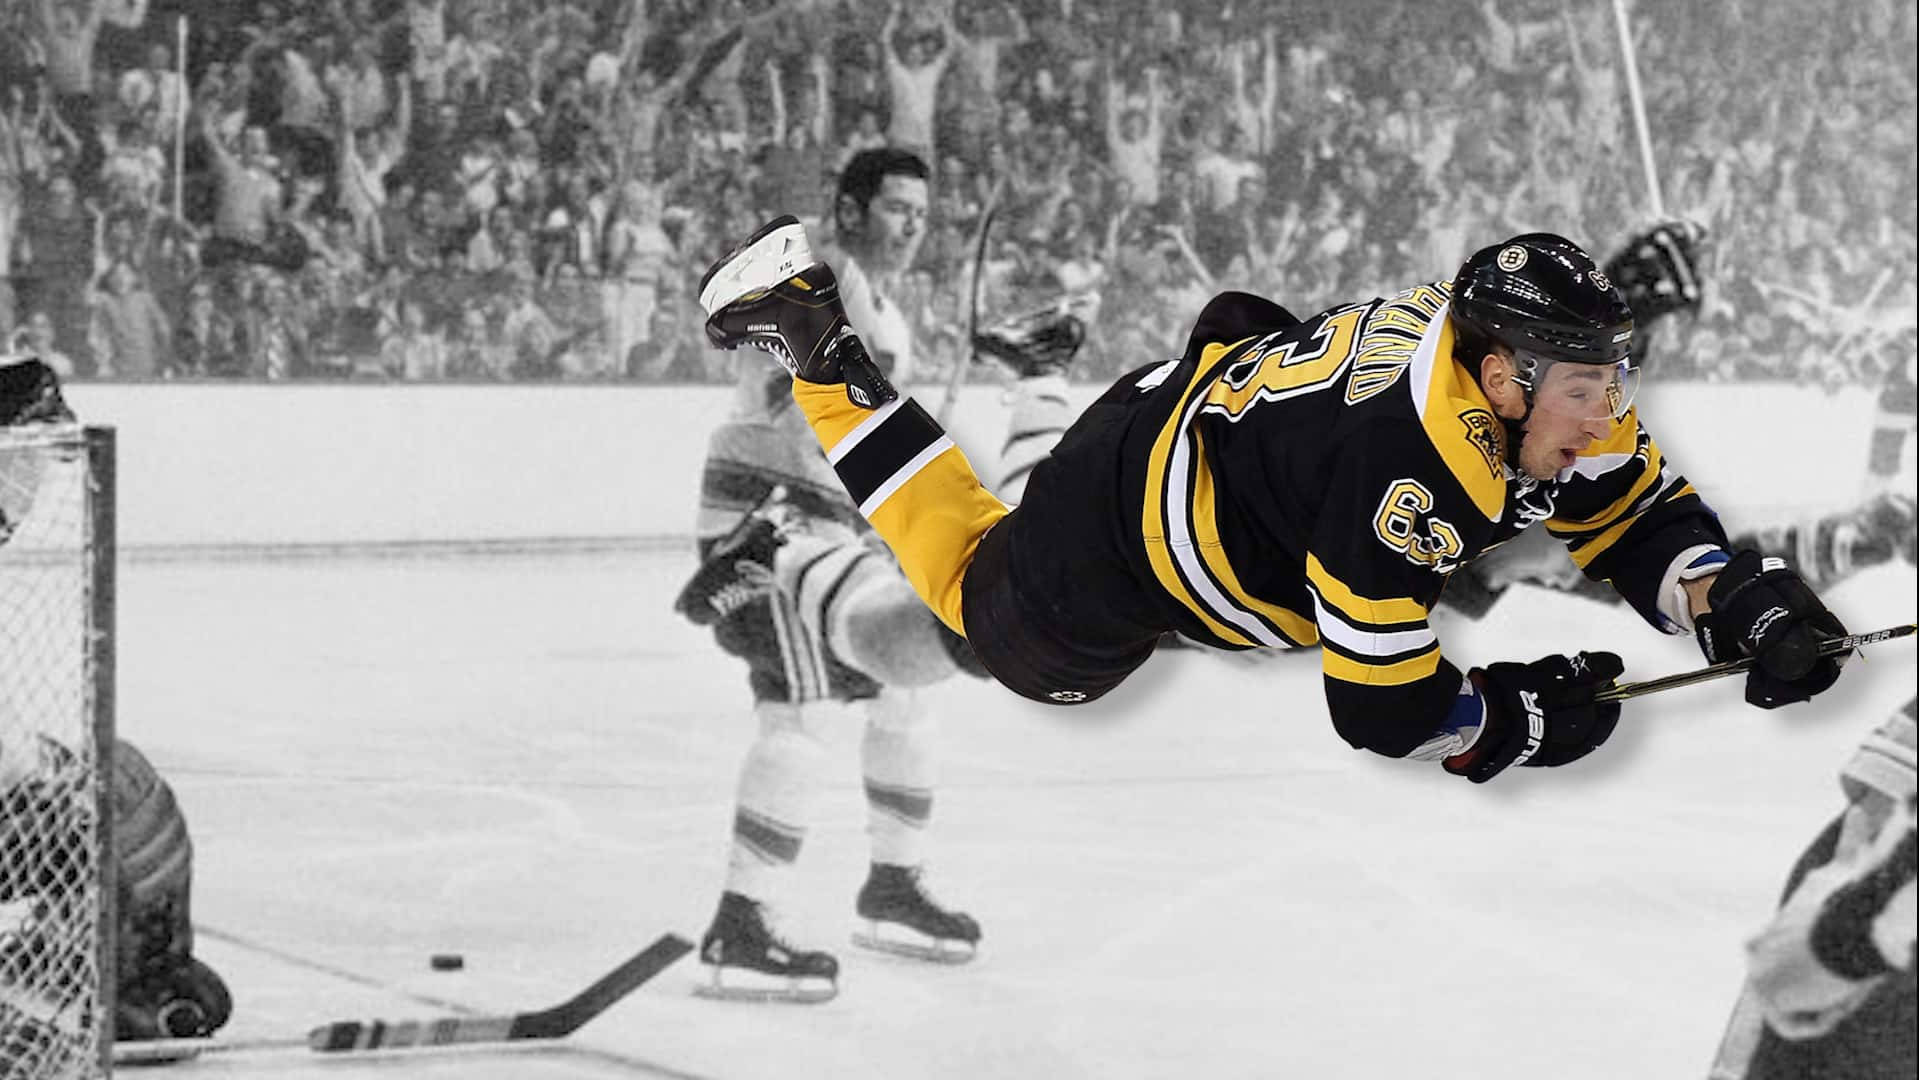 Download Brad Marchand Boston Bruins Fanart Wallpaper